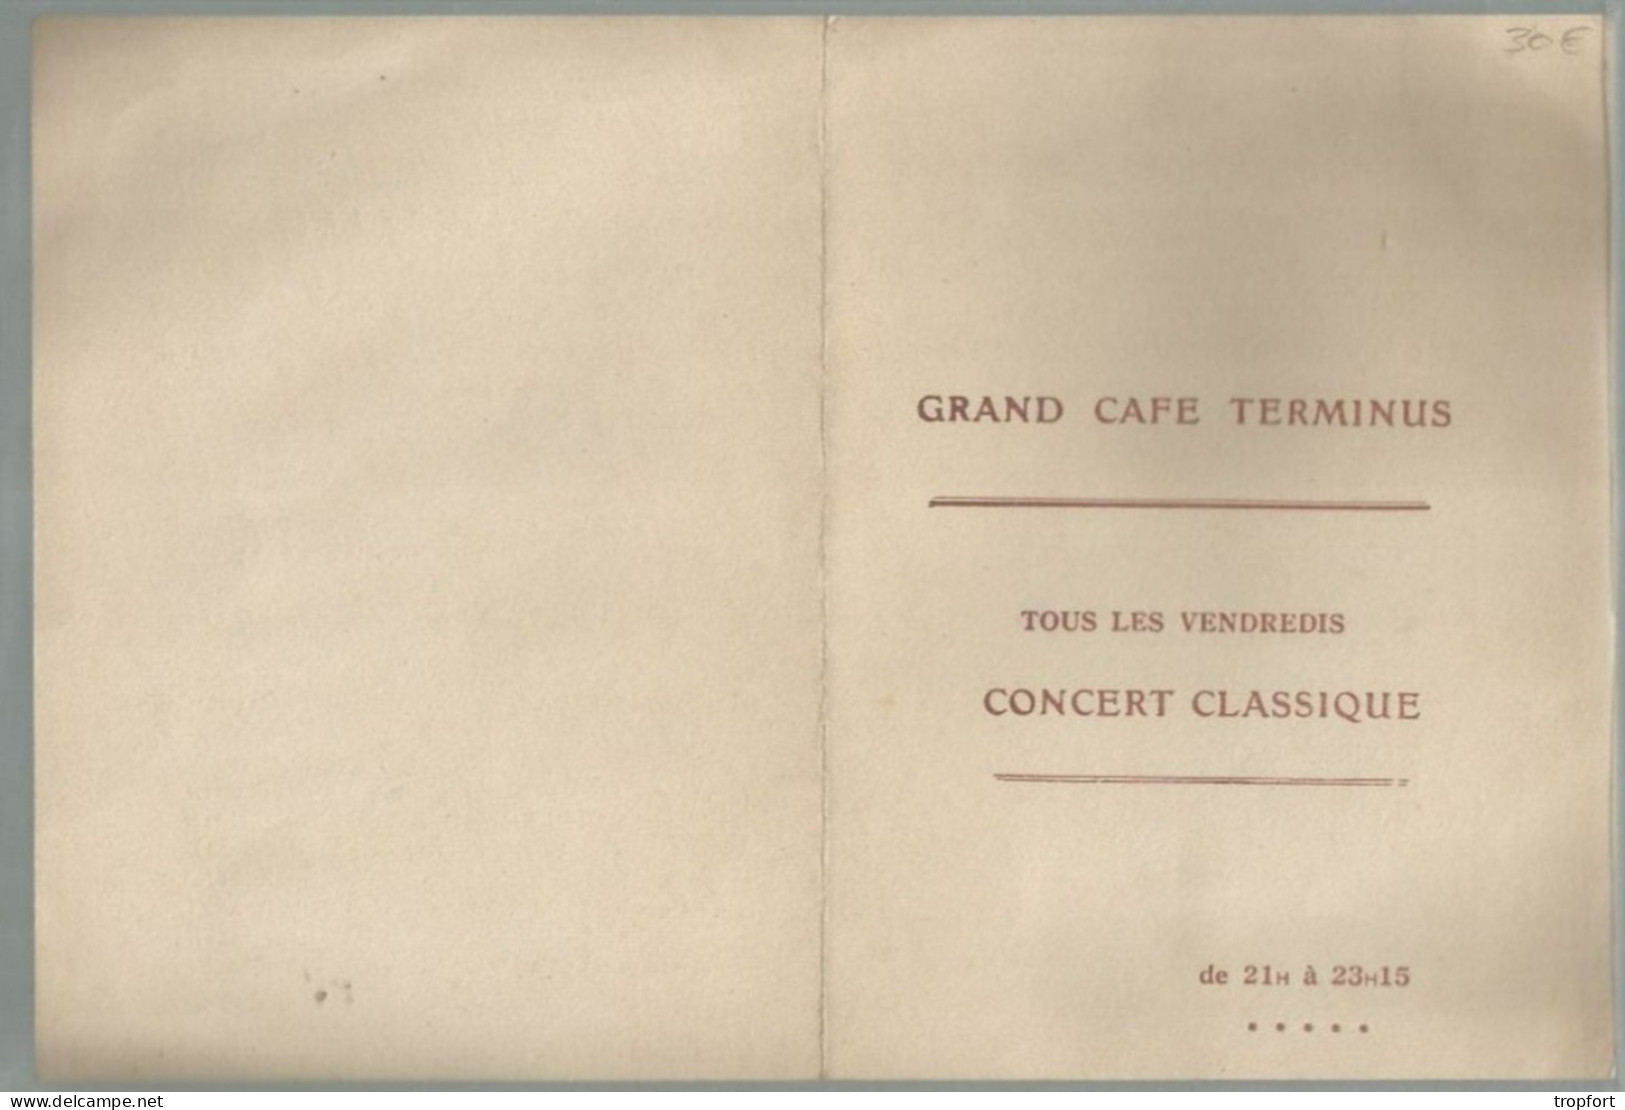 PG / Vintage // PROGRAMME CONCERT CLASSIQUE Musique 1934 PG Grand Café Terminus PG / V BADENES GARCIA Madrid // DELVIGNE - Programmes